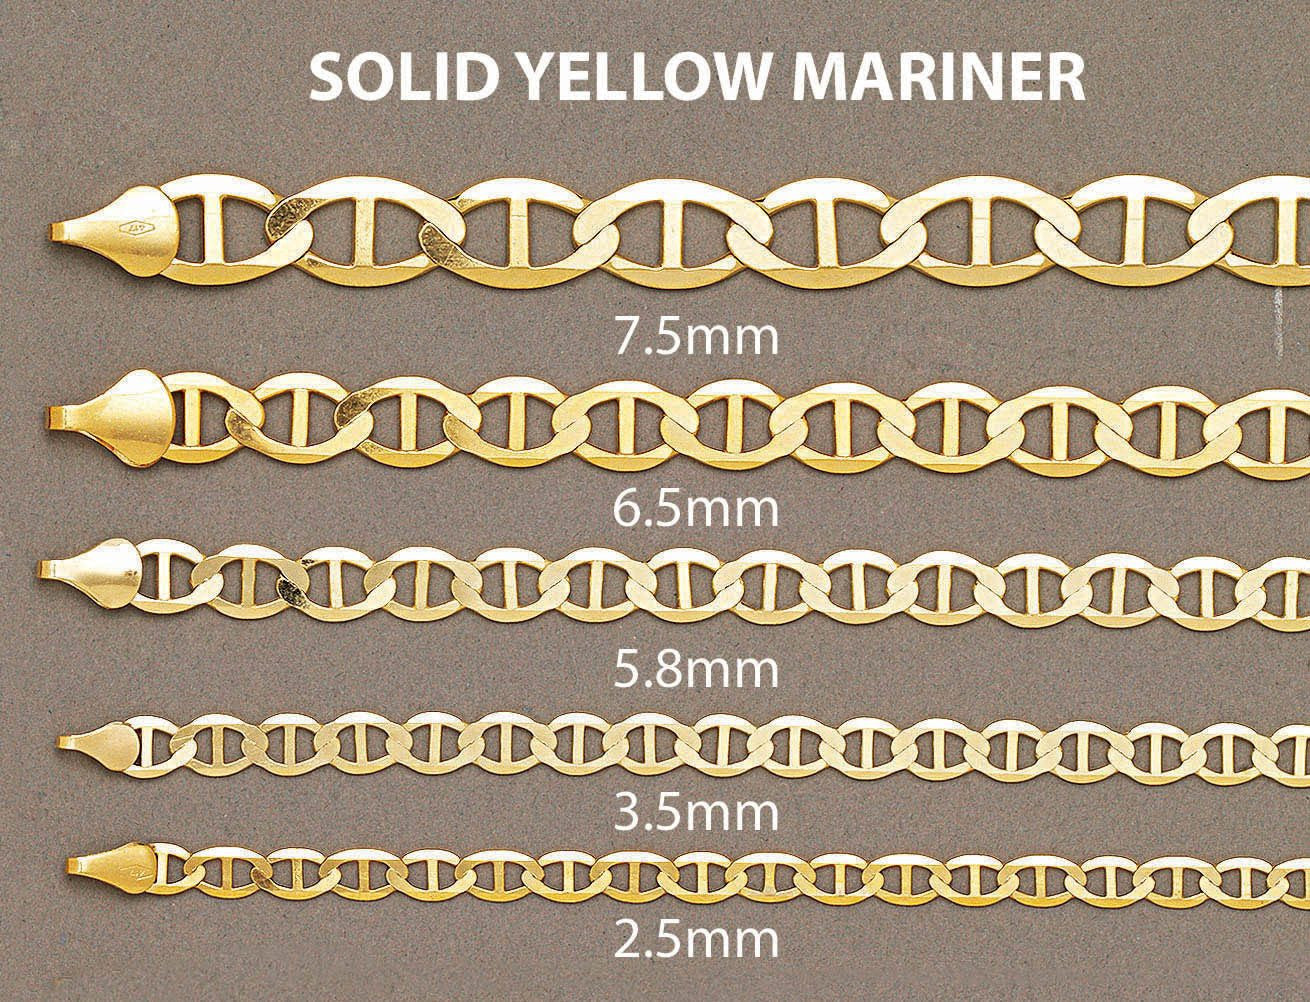 14k Yellow Solid Mariner Bracelet